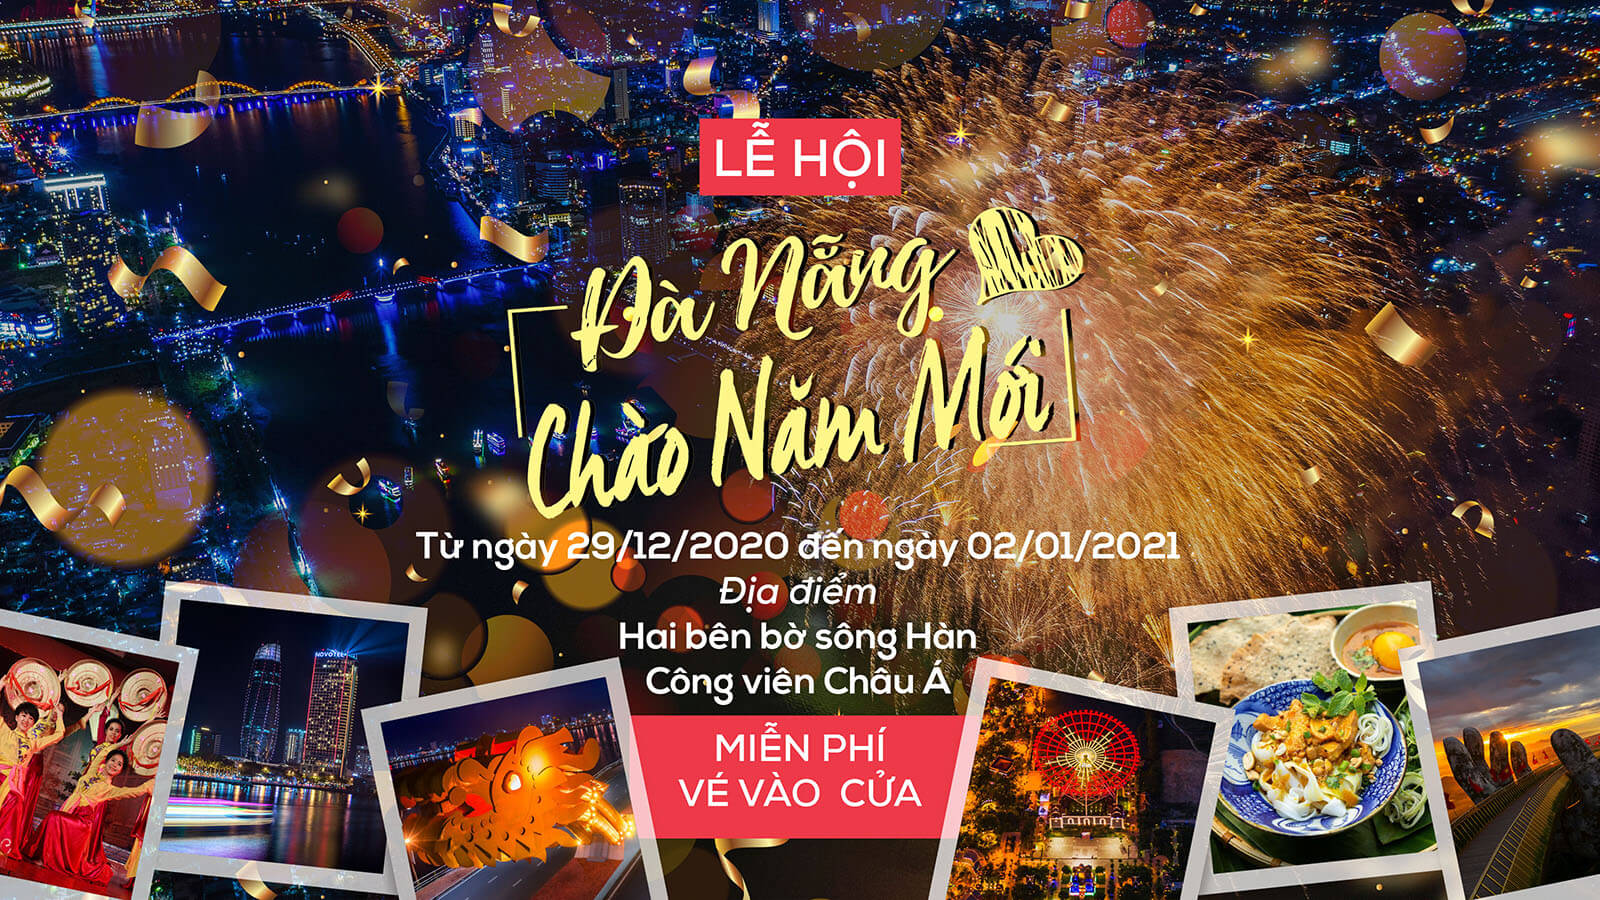 Le Hoi Da Nang Chao Nam Moi 2021